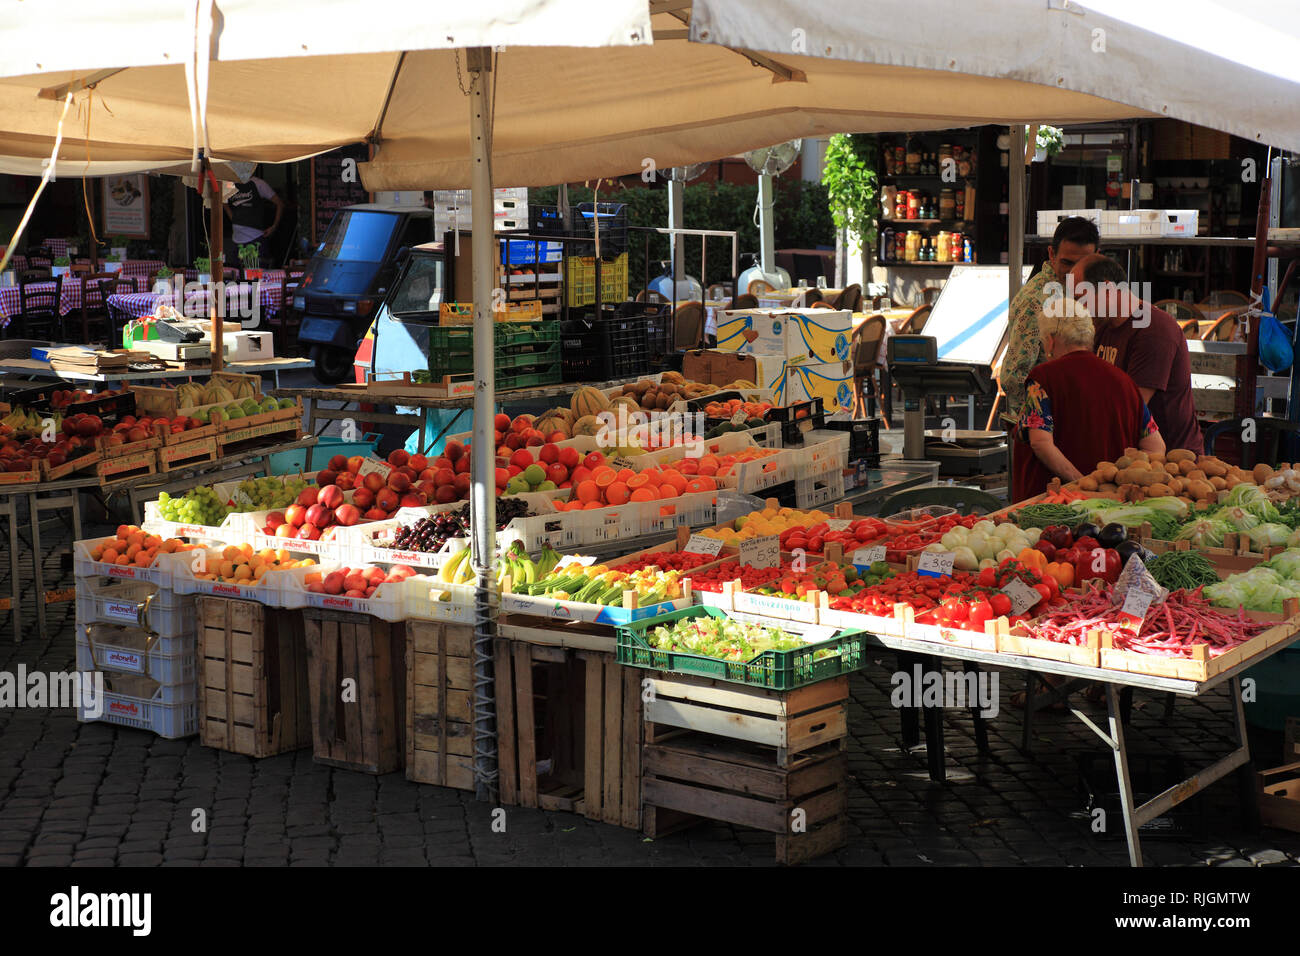 The daily market at the Campo de fiori, Rome, Italy Stock Photo